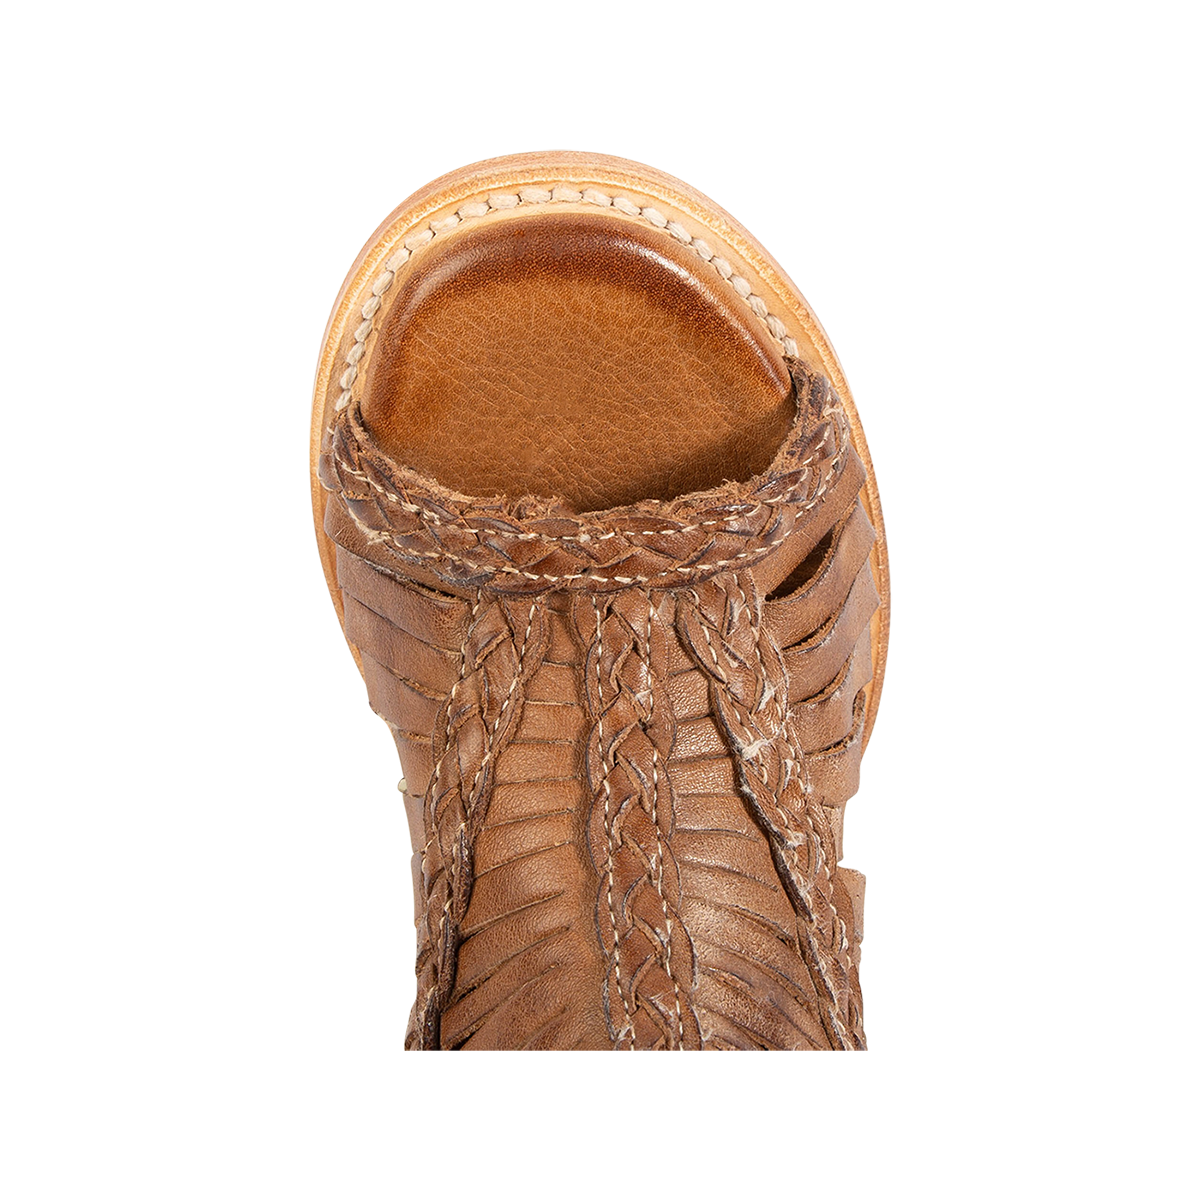 Top view showing an open toe construction on FREEBIRD women's Bela wheat leather sandal 